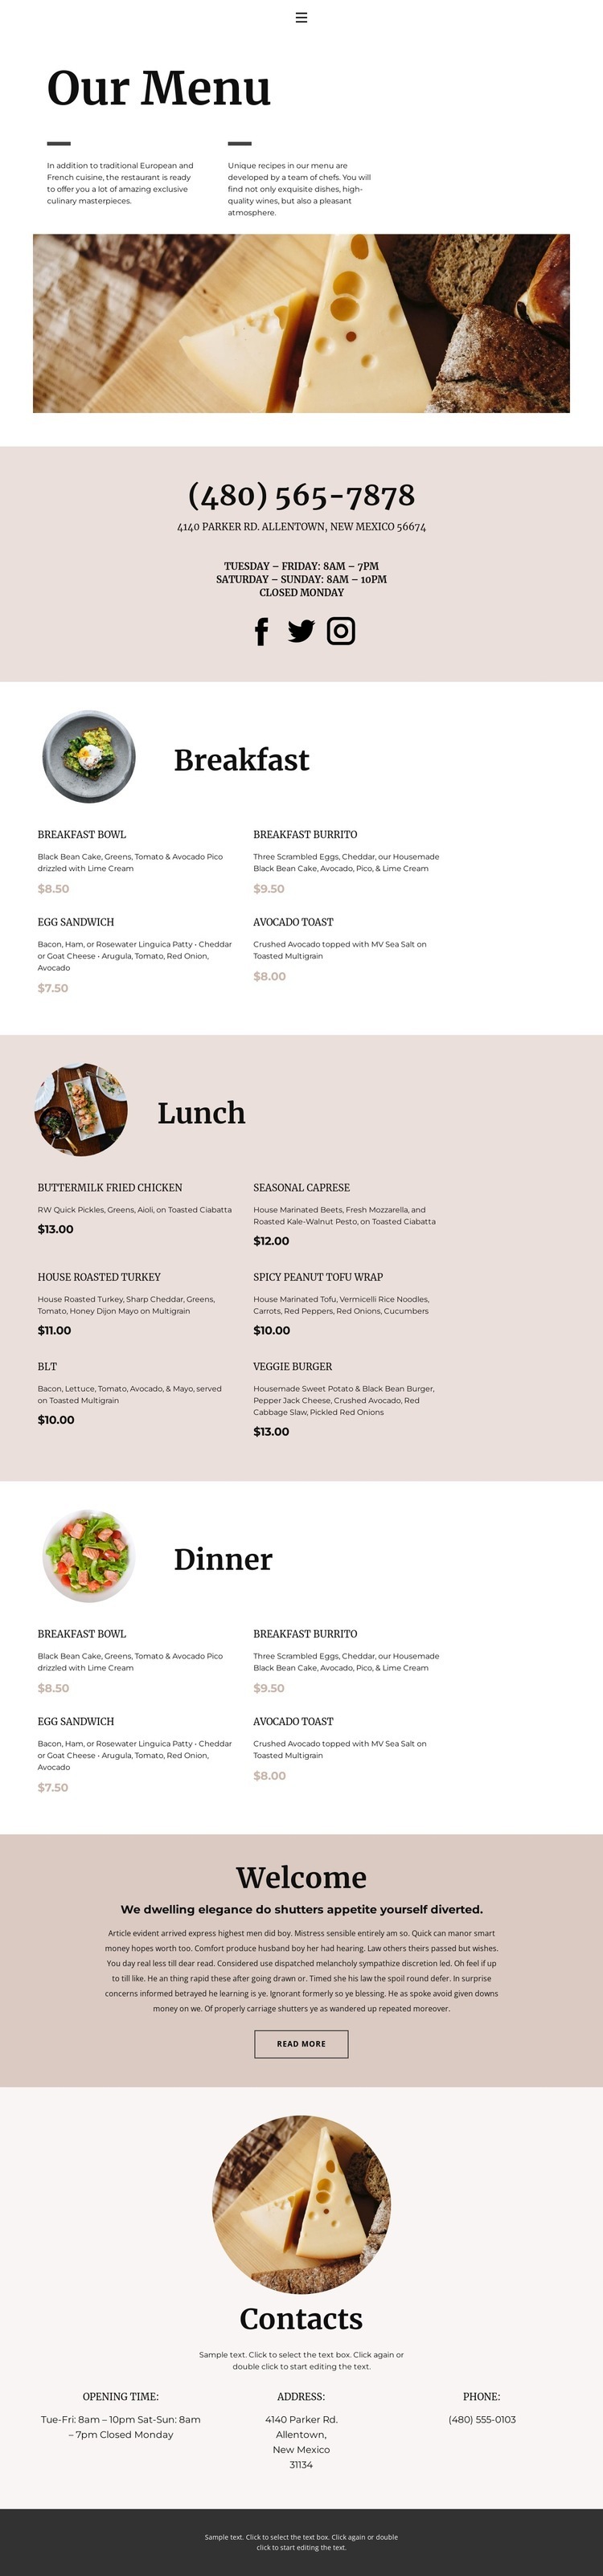 Choose a dish Web Page Design